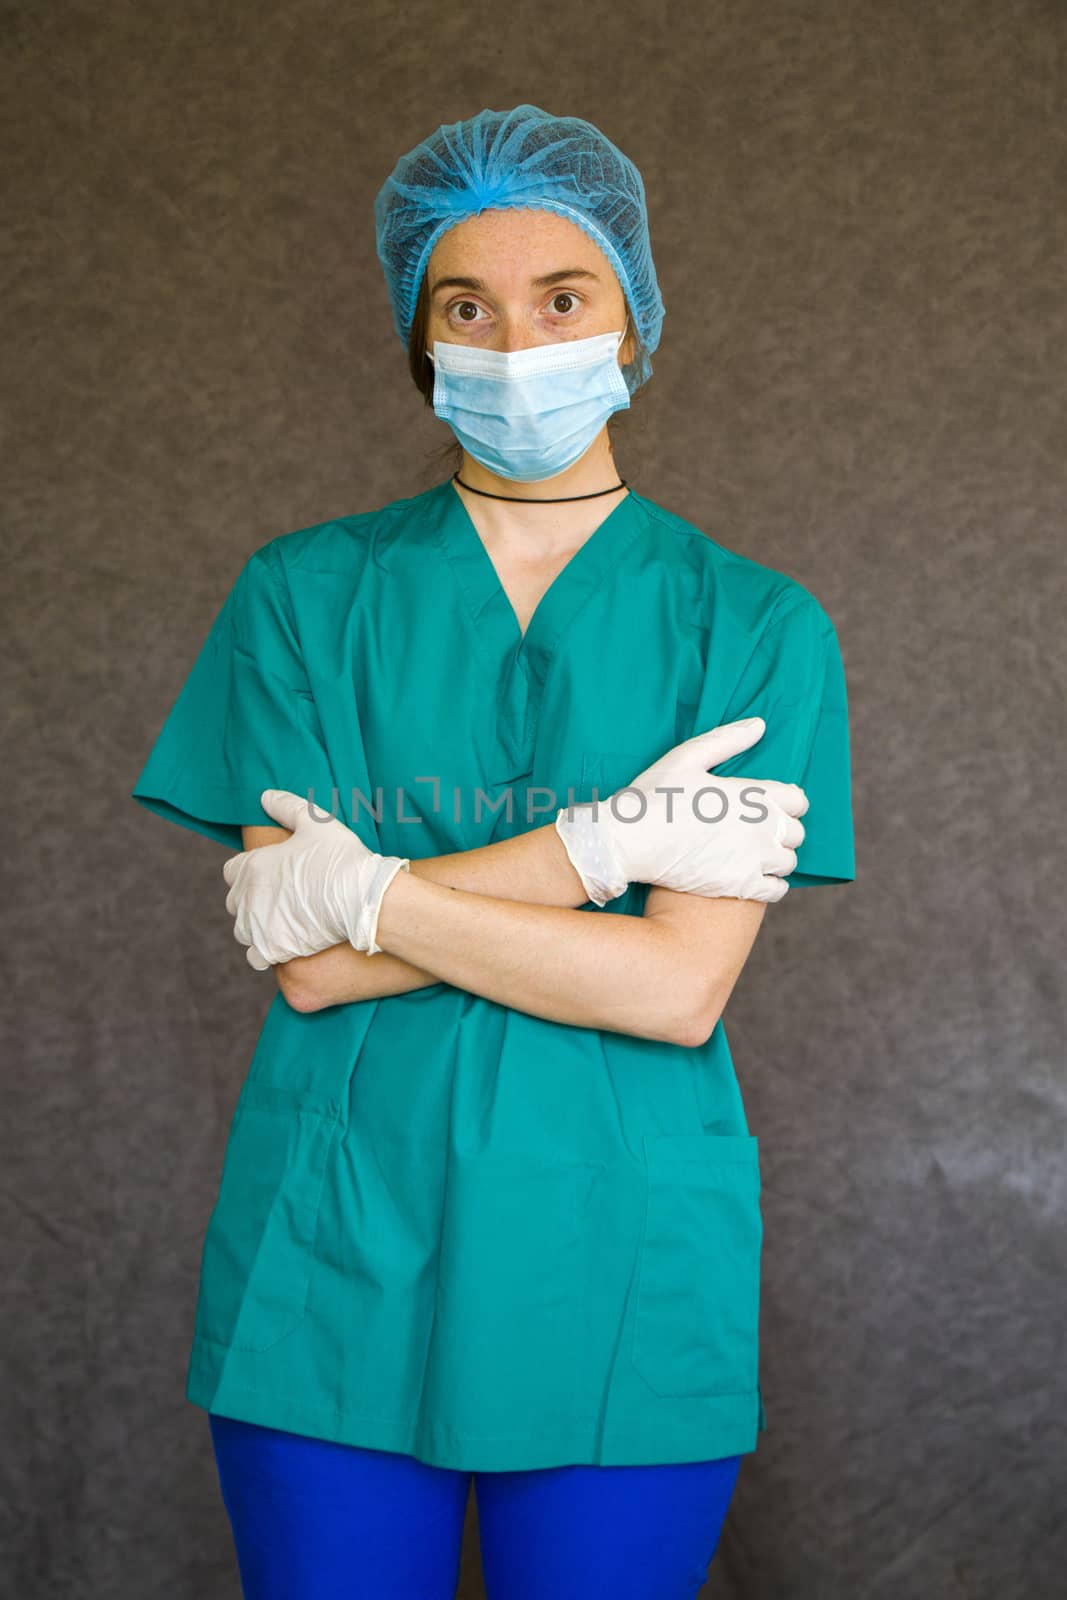 Woman doctors portrait, doctors with mask, glove and uniform. Uniform for surgery and viruses.